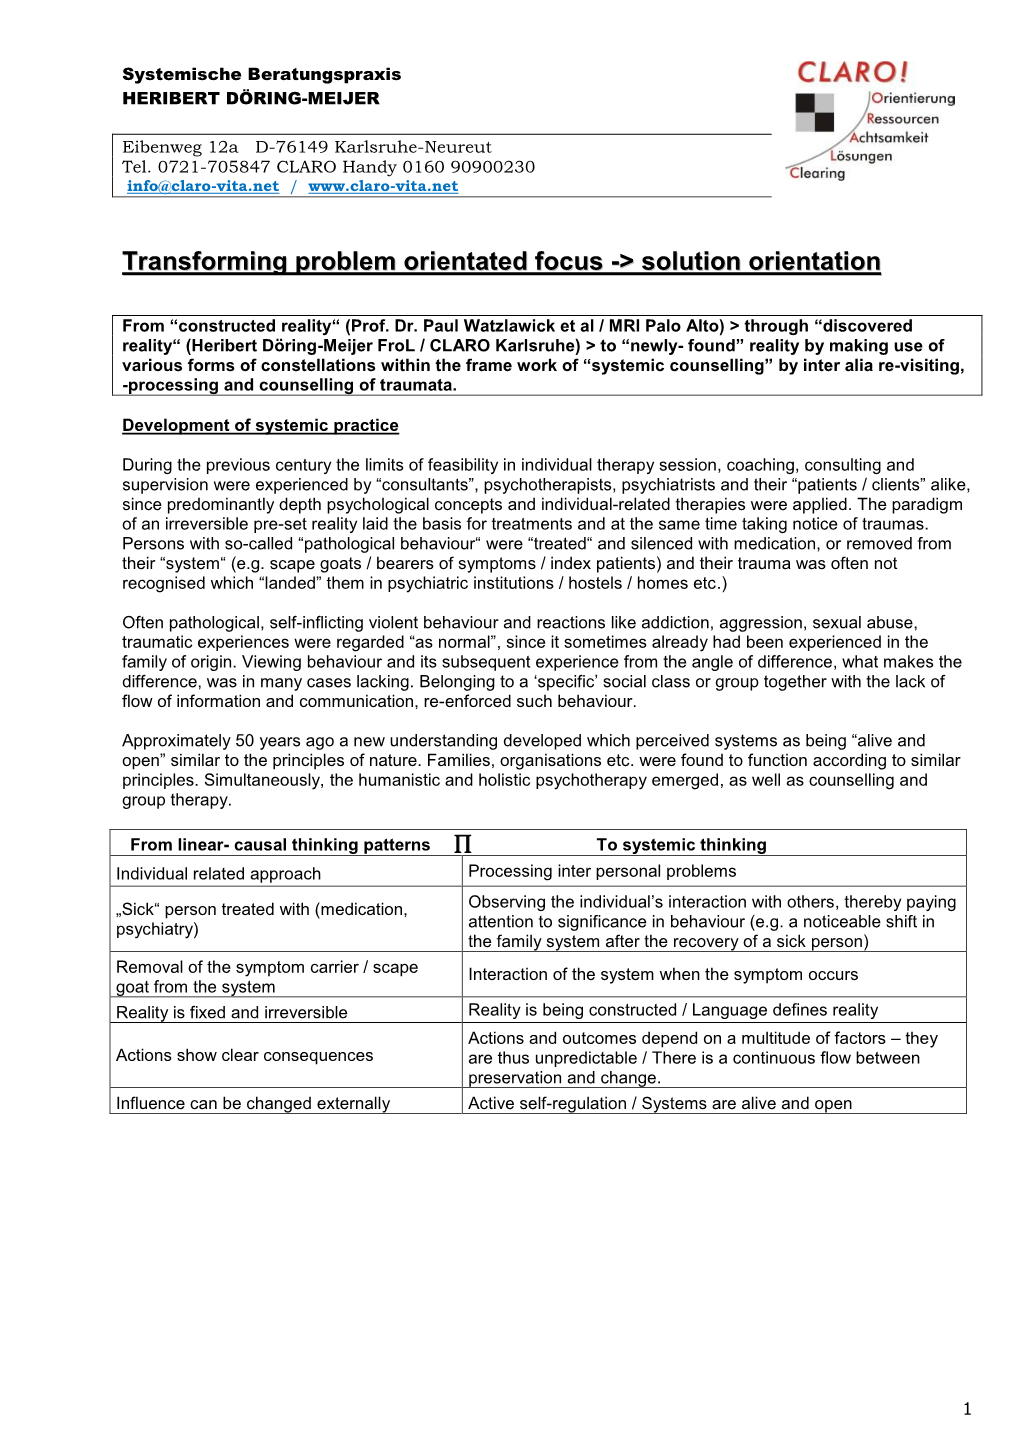 Transforming Problem Orientated Focus -> Solution Orientation